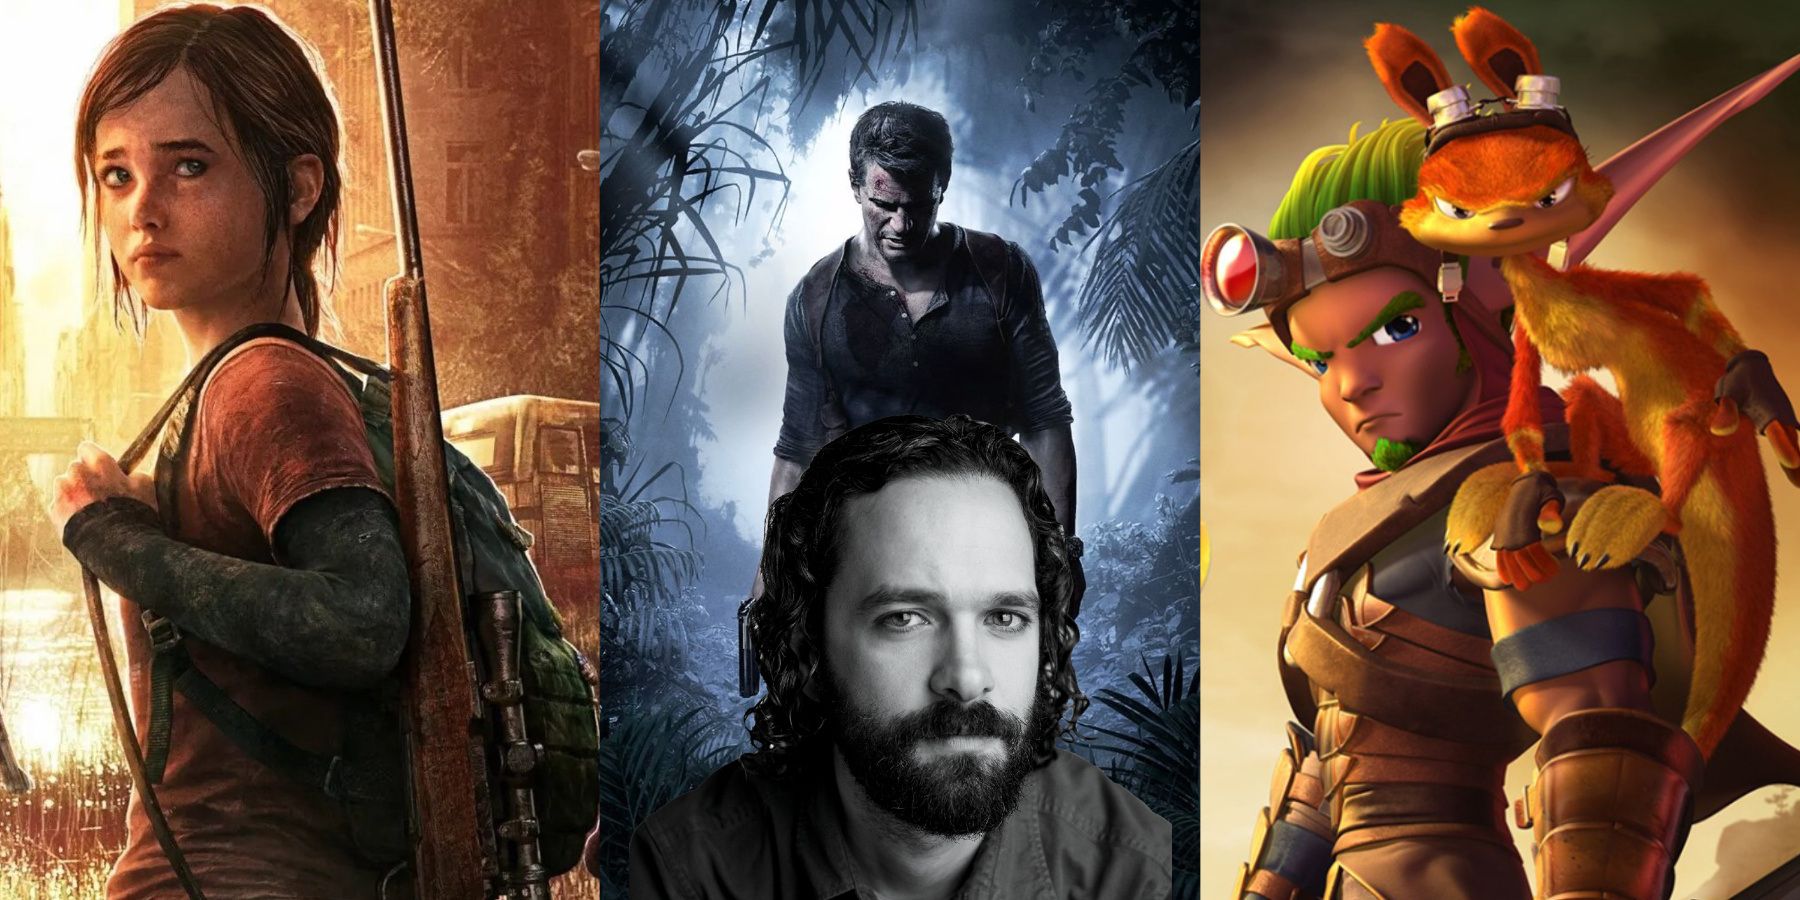 Naughty Dog Creative Head Neil Druckmann to Receive NYVGCC Legend